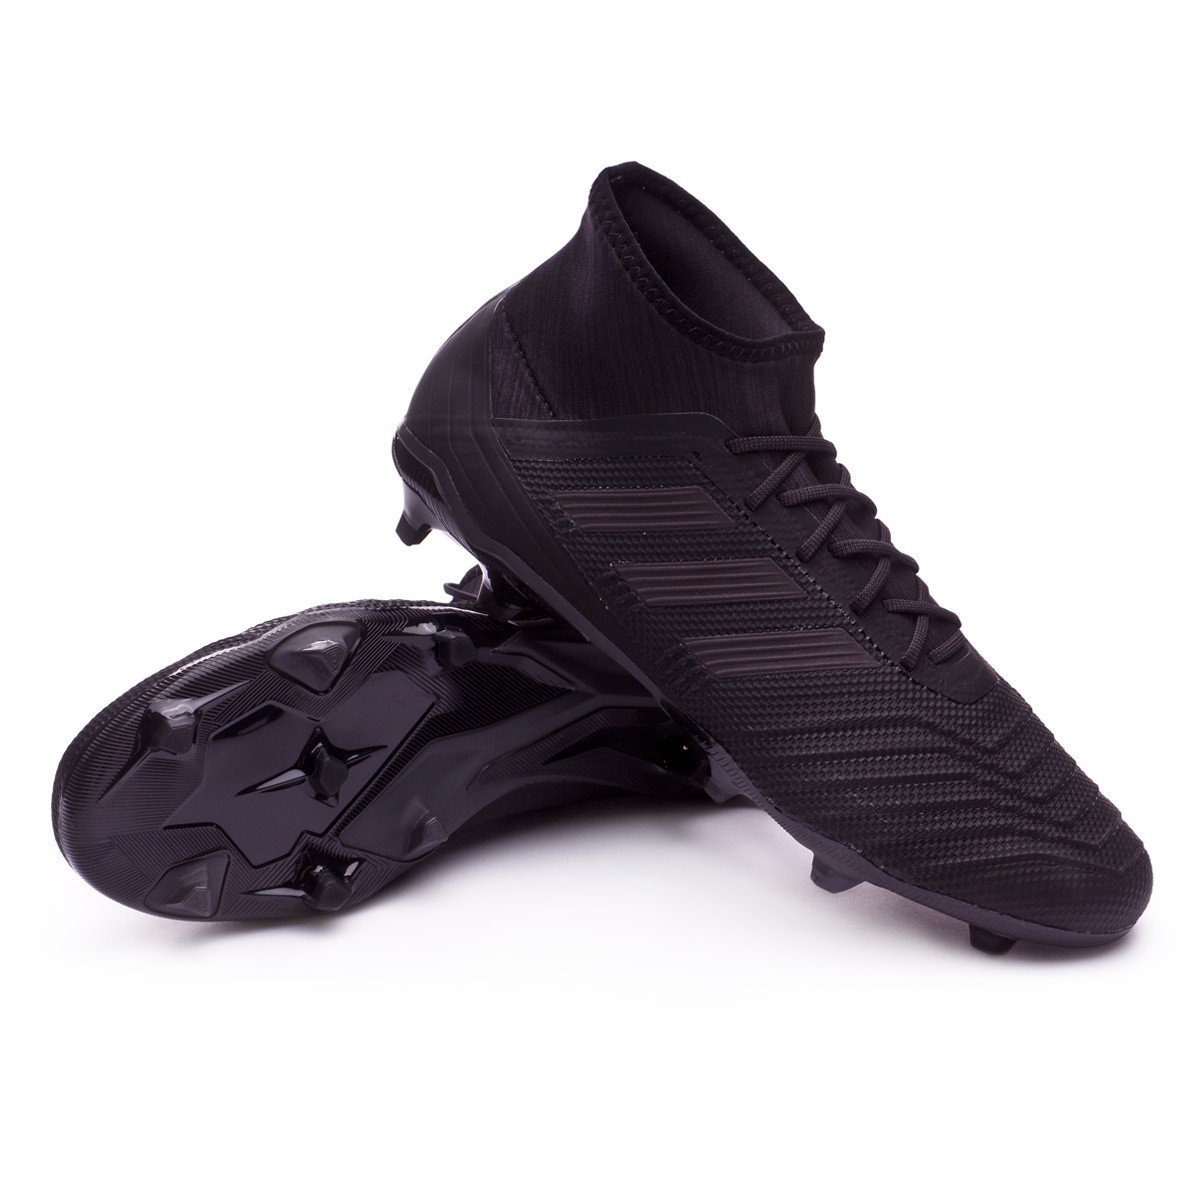 black adidas soccer cleats